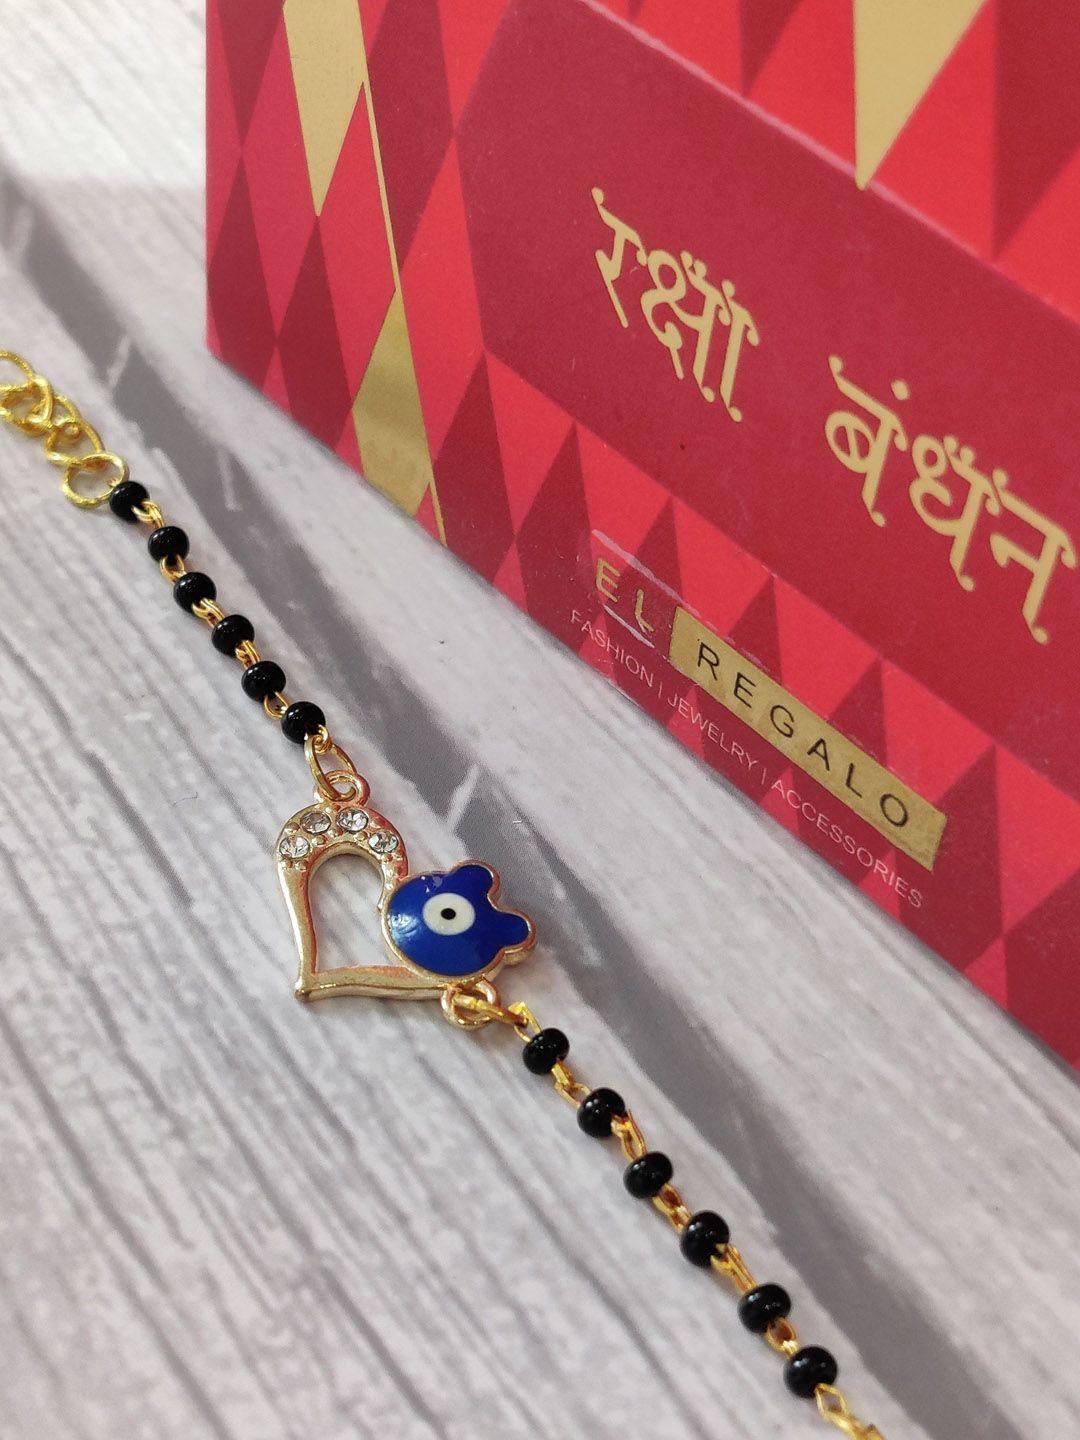 el regalo gold coloured & blue evil eye wrap around rakhi with roli chawal & raksha bandhan greeting card